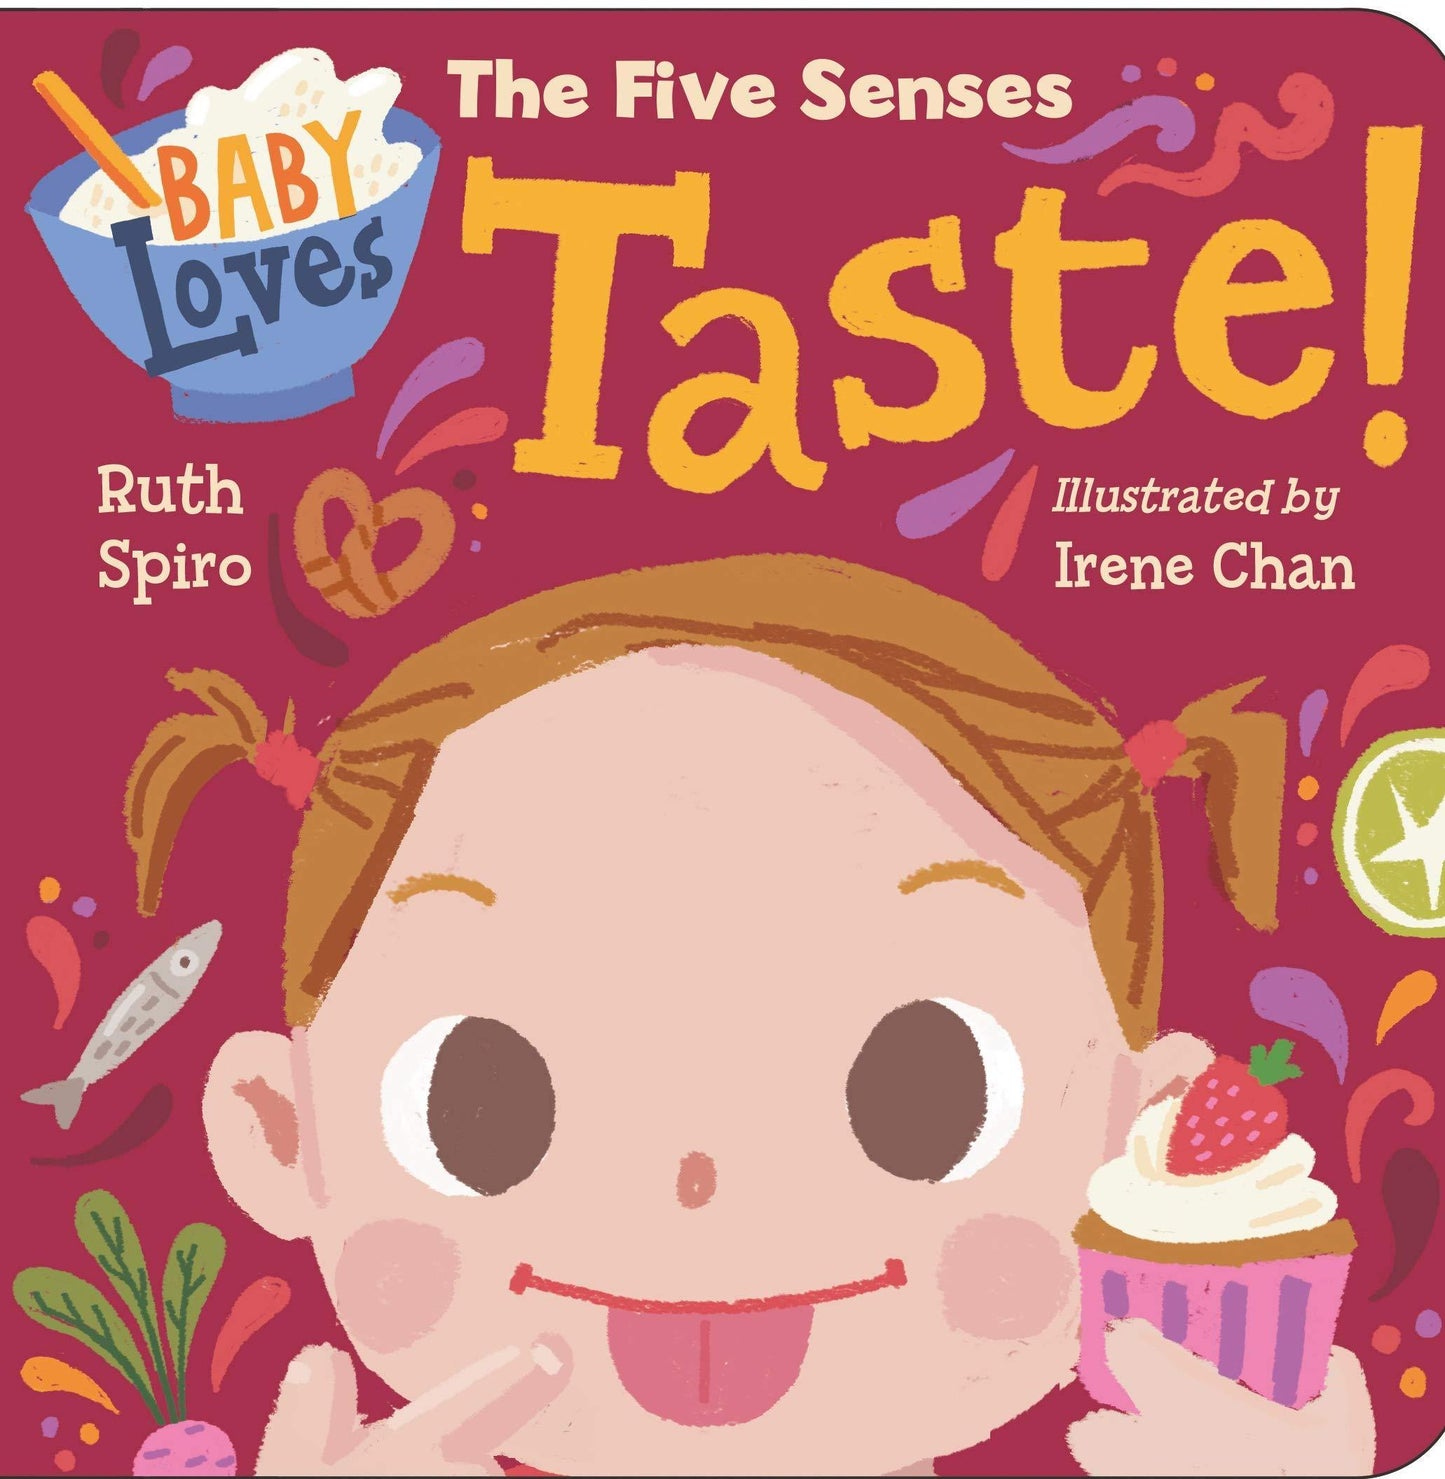 Baby Loves the Five Senses: Taste! - ECOBUNS BABY + CO.